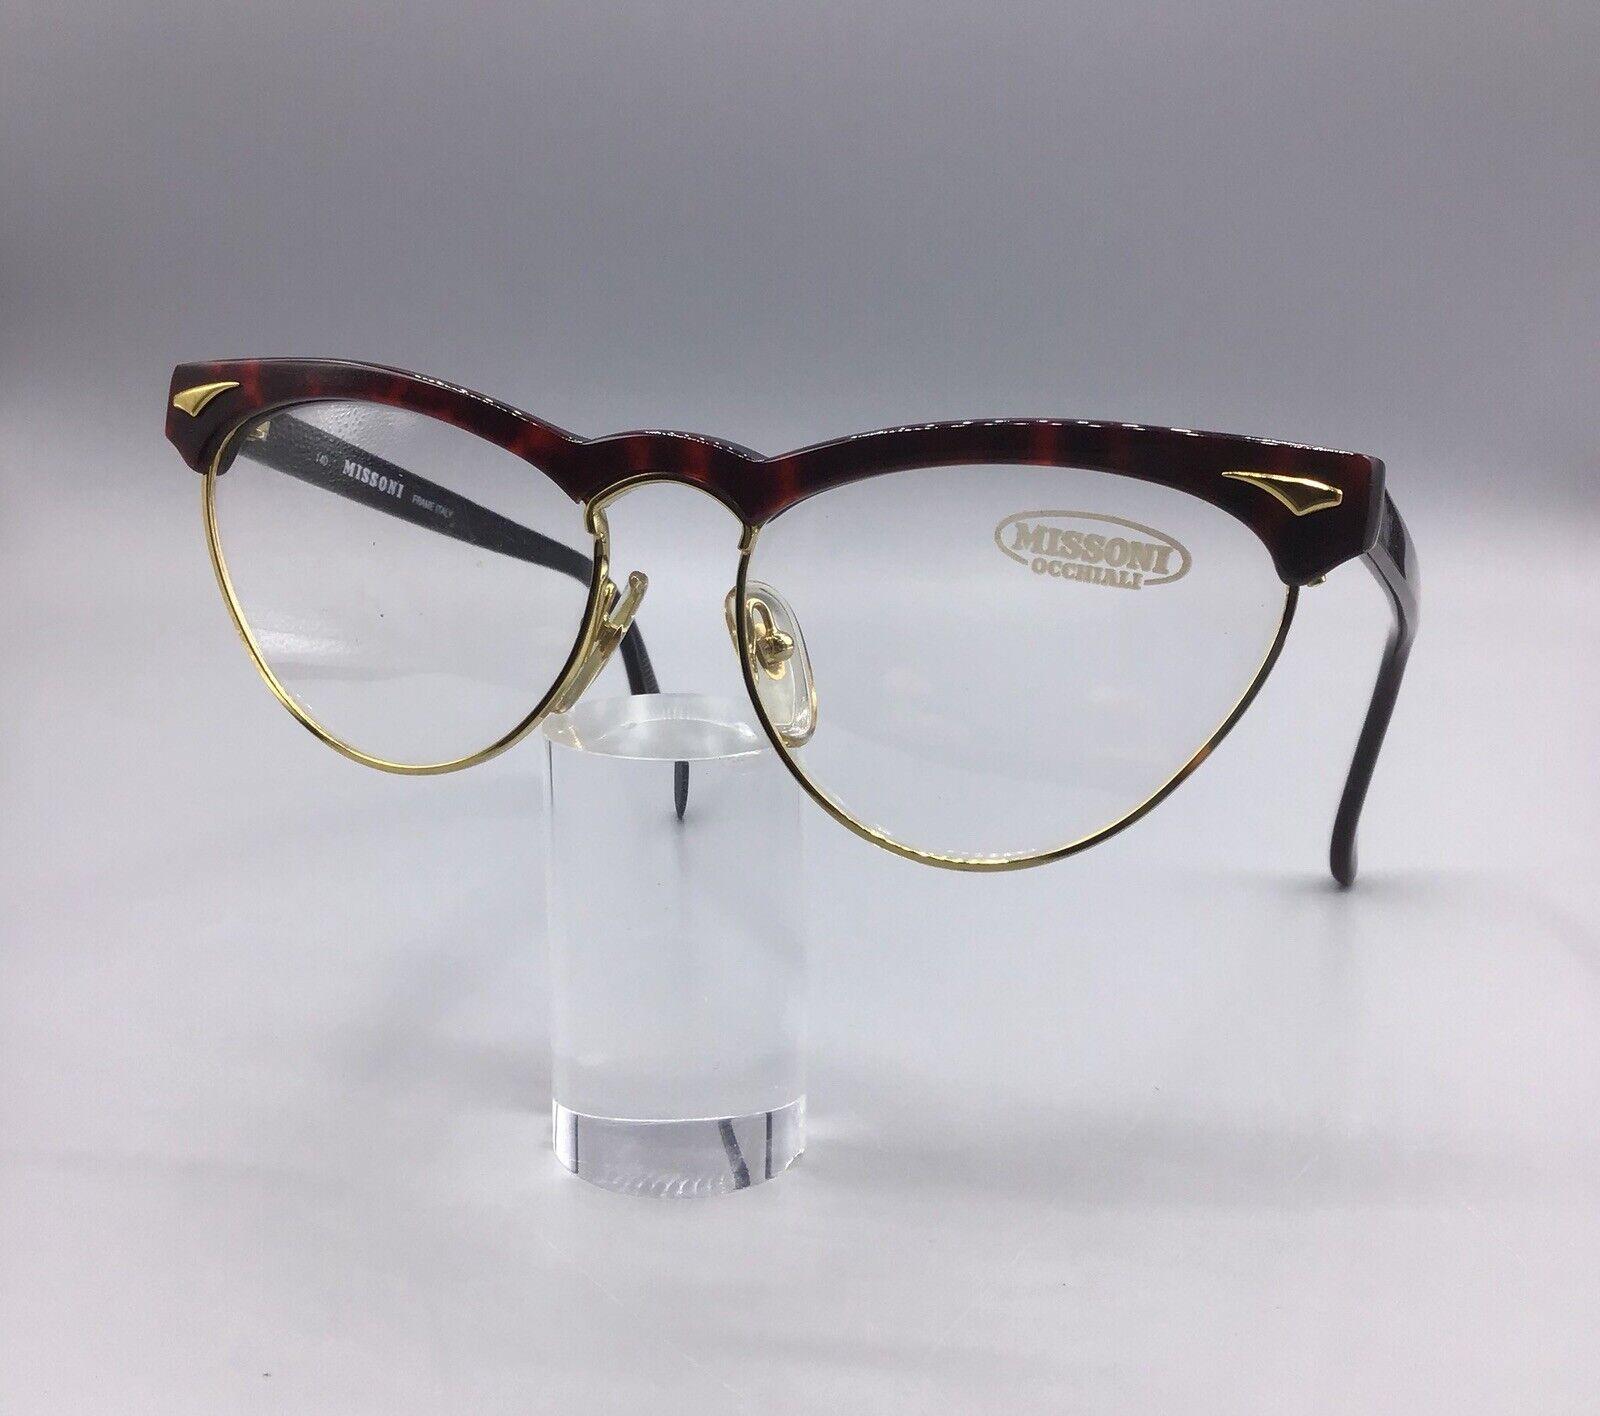 Missoni Occhiale Eyewear Vintage M 179 20Z Brillen Lunettes Gafas Eyeglasses